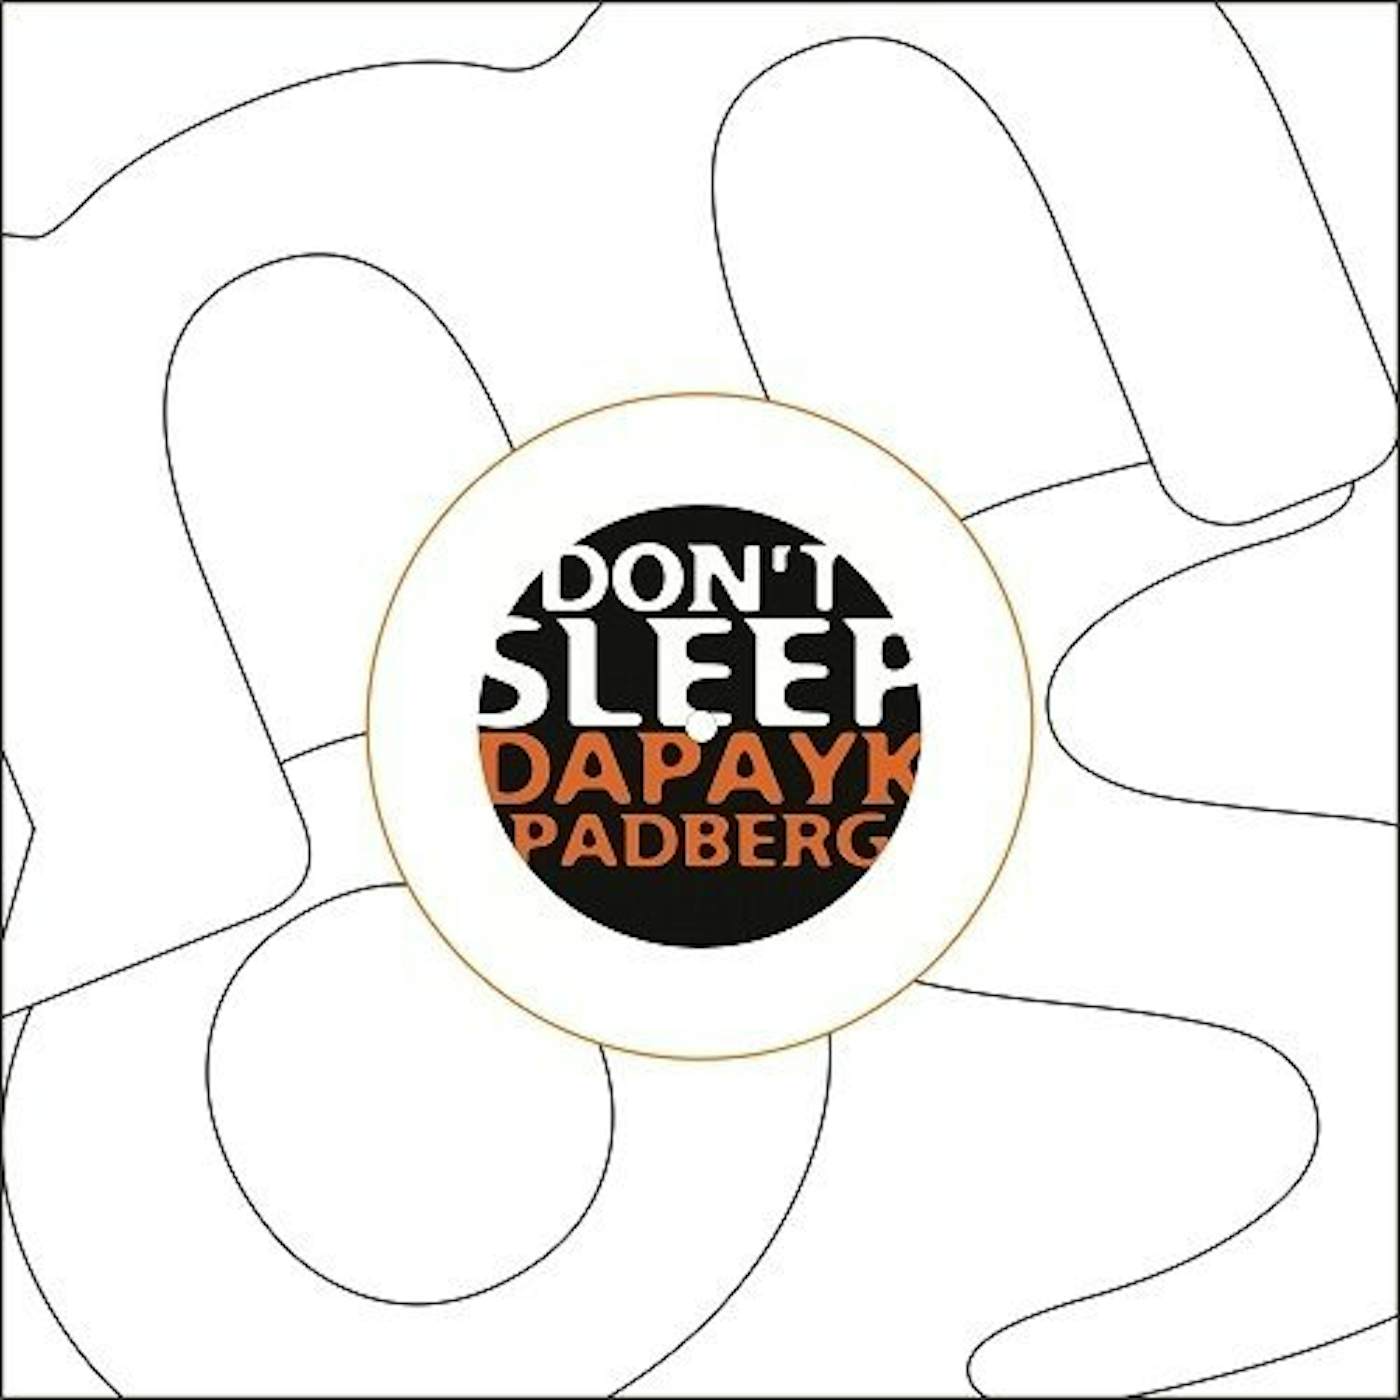 Dapayk & Padberg DONT SLEEP Vinyl Record